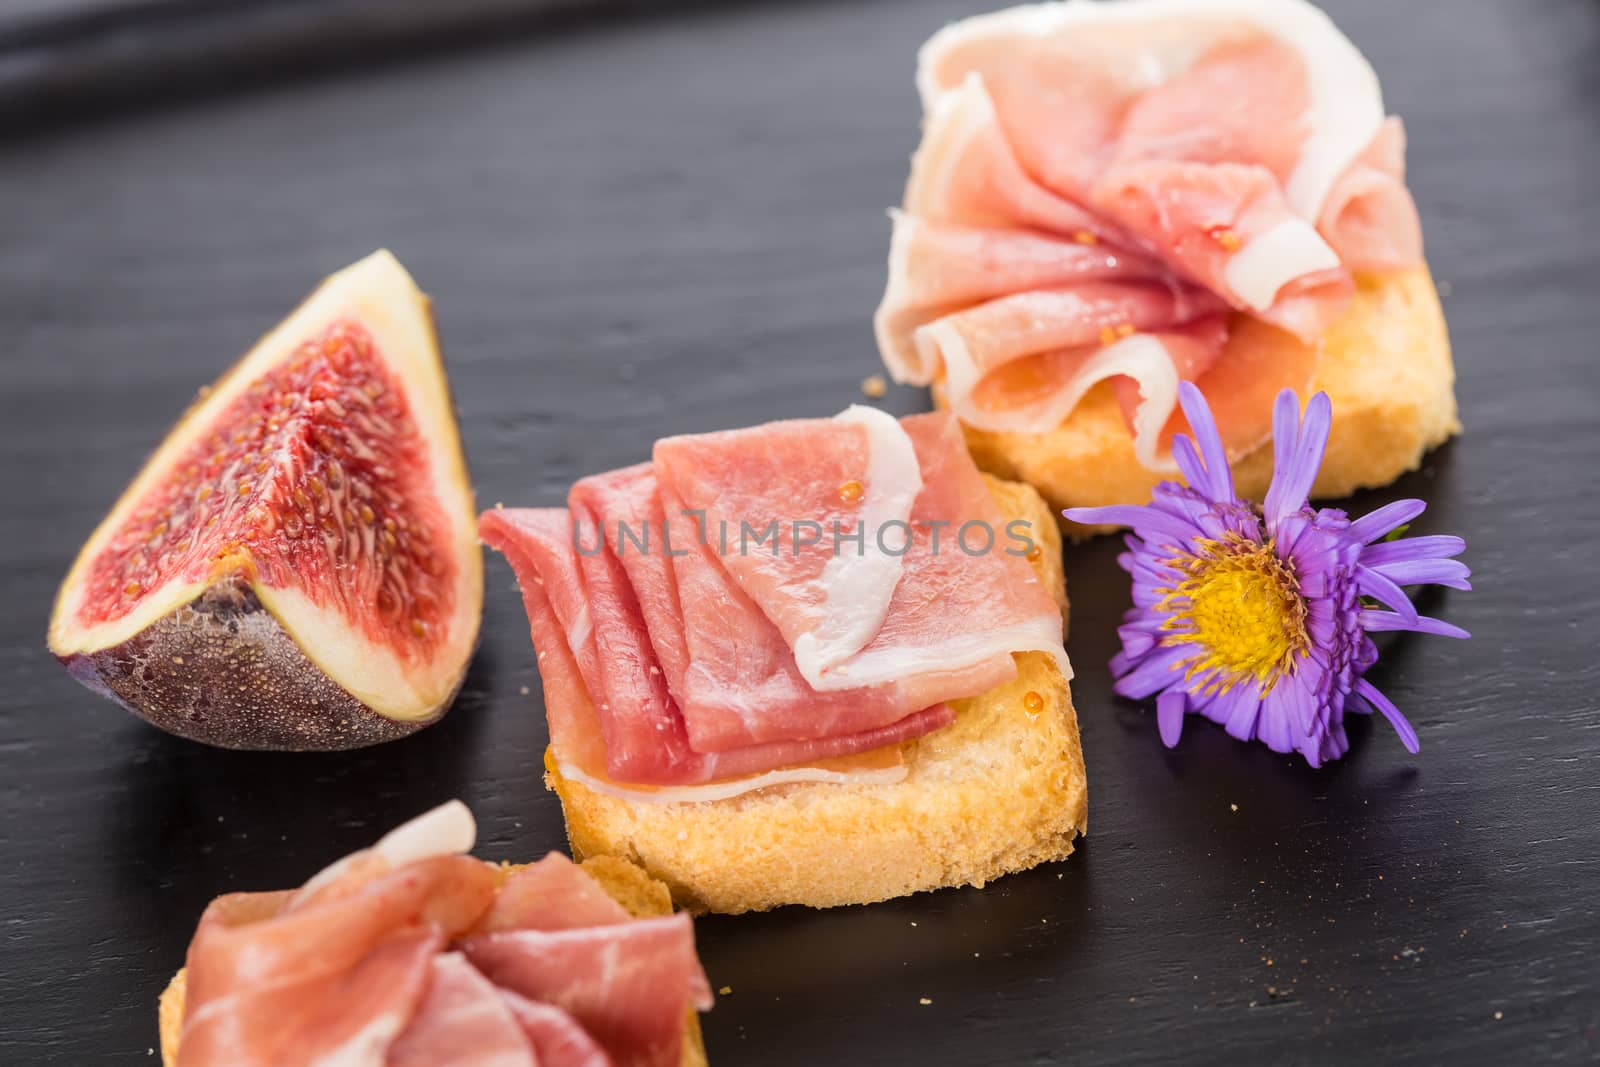 Slices of figs in Prosciutto by sarymsakov